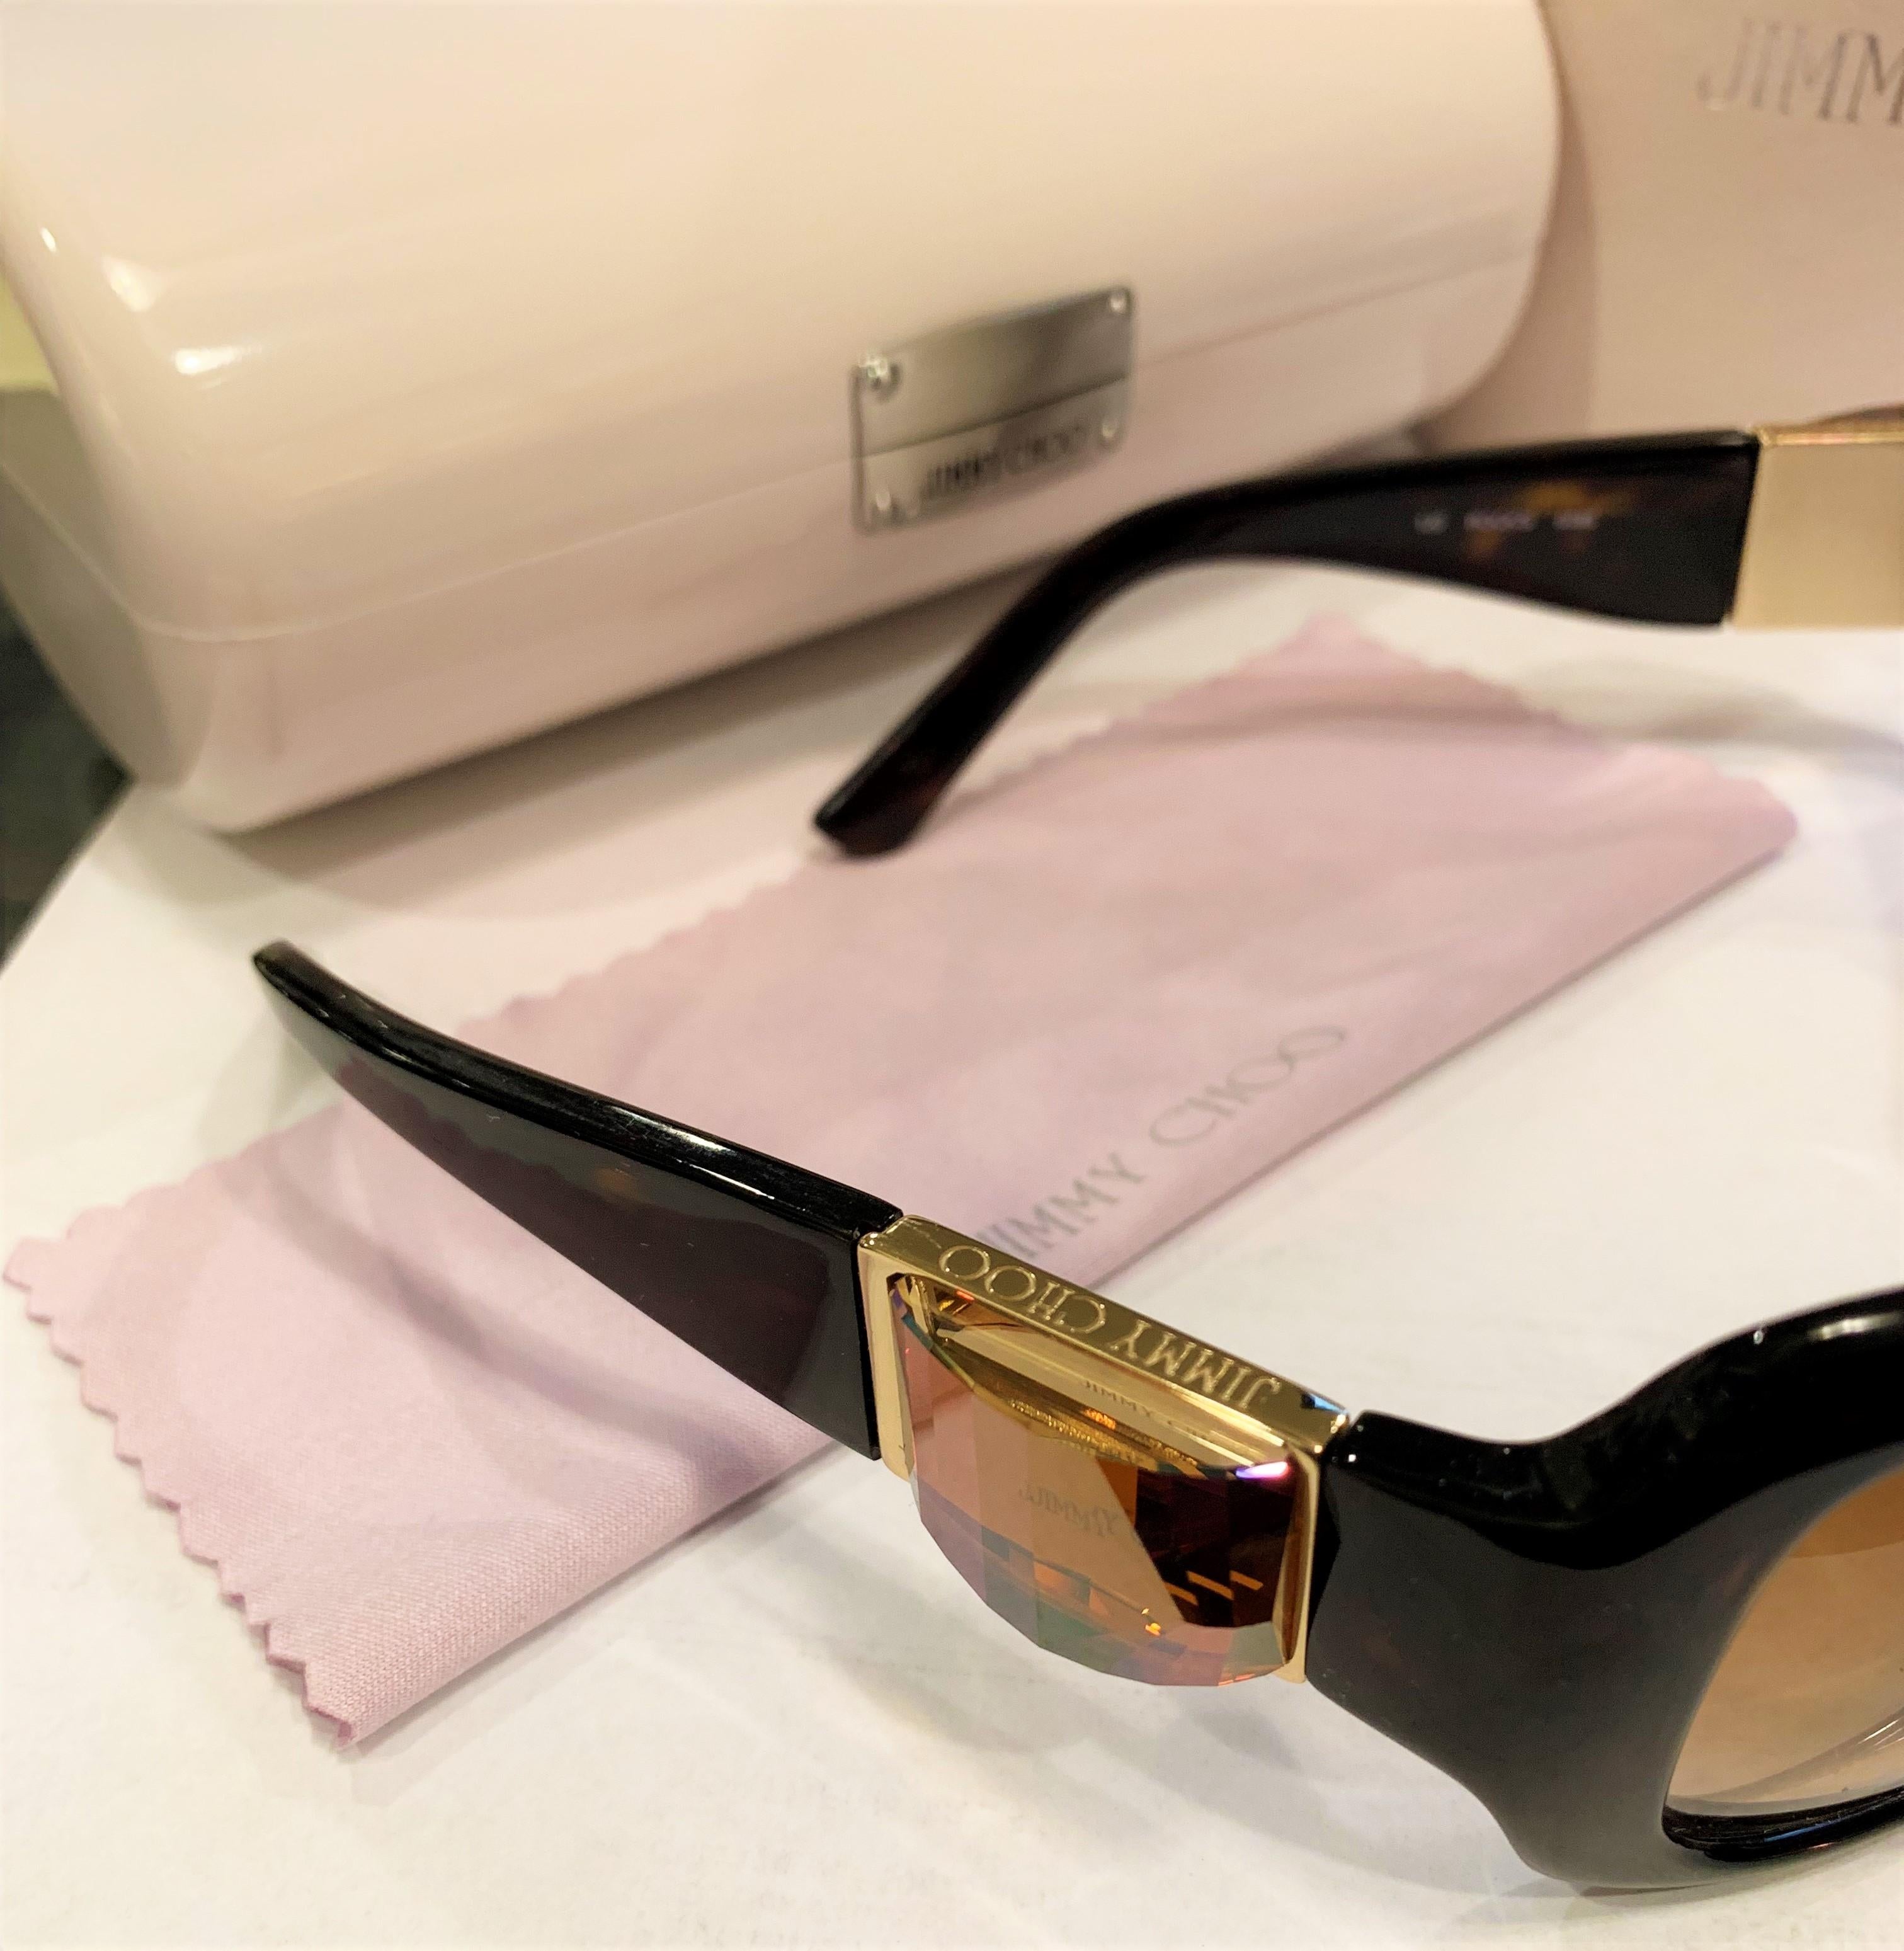 New Jimmy Choo Swarovski Sunglasses With Case & Box $595 2